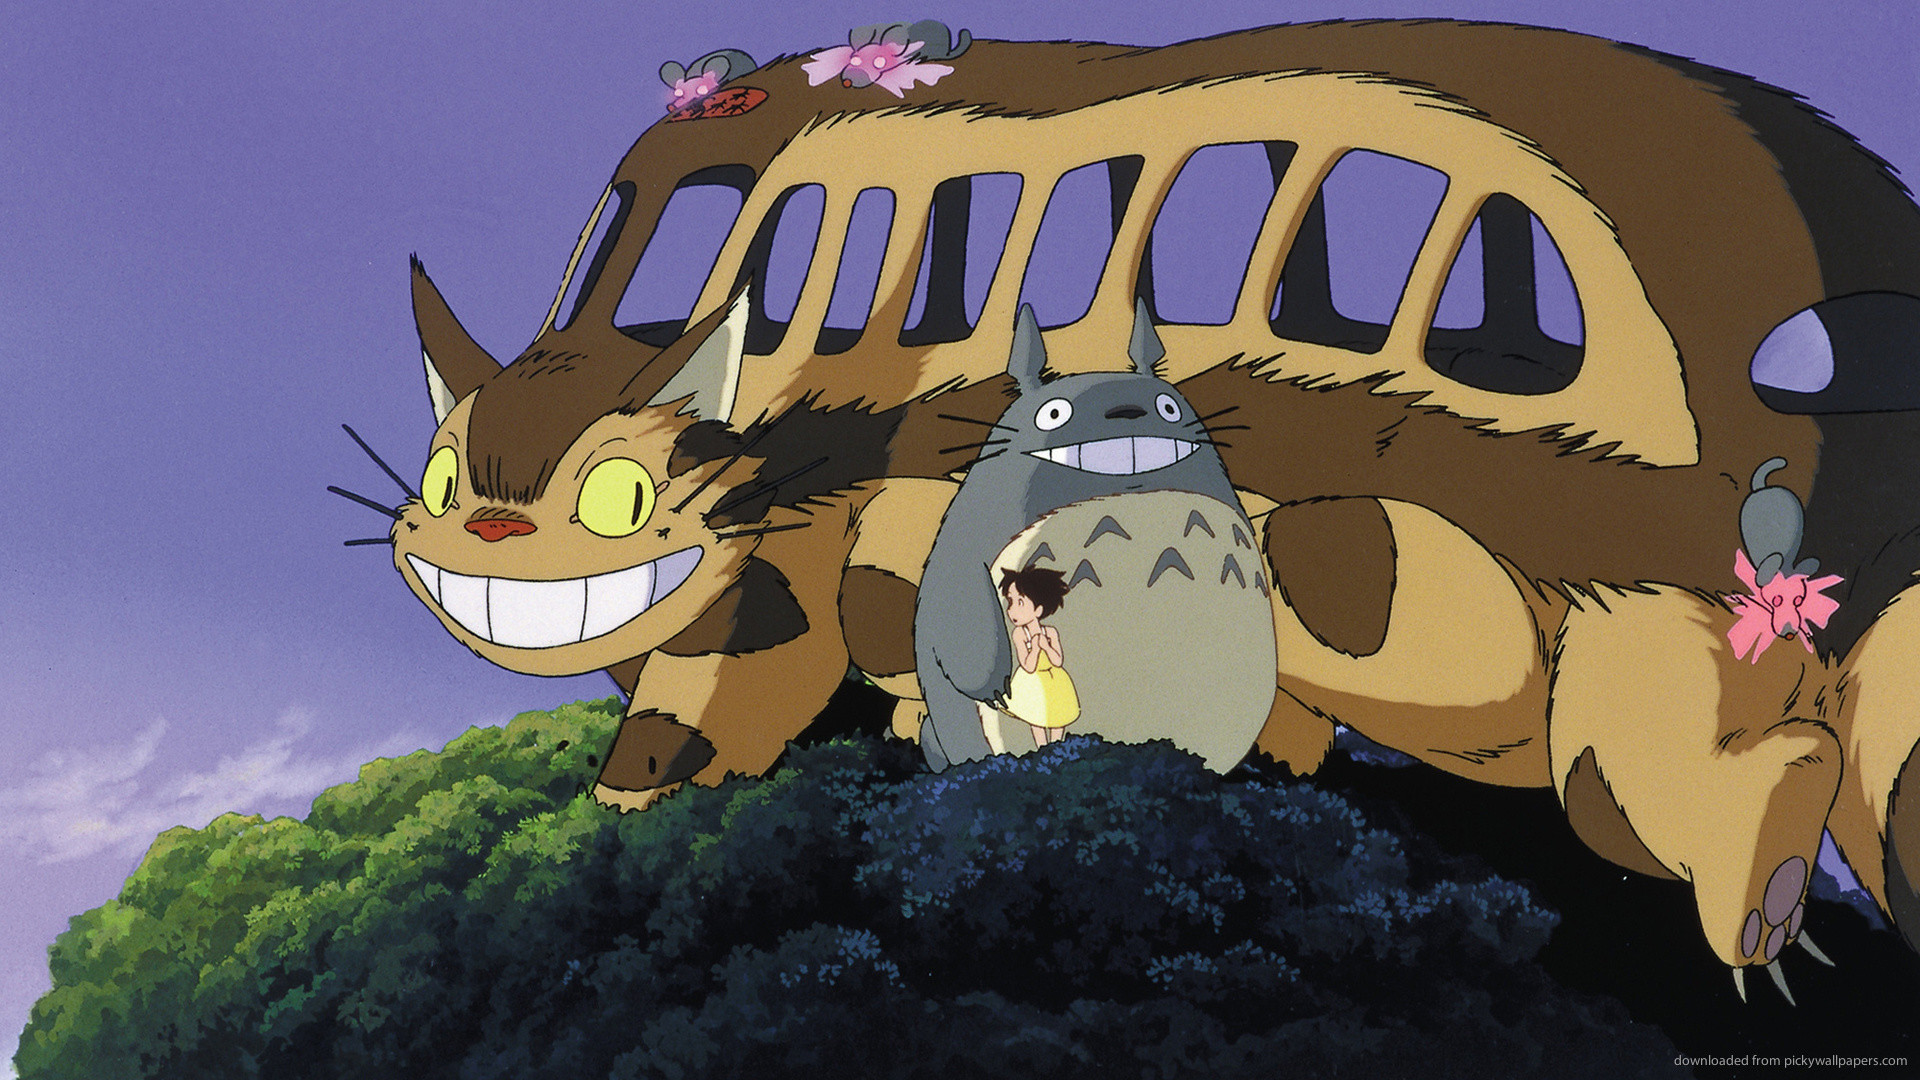 HD My Neighbor Totoro Catbus wallpaper